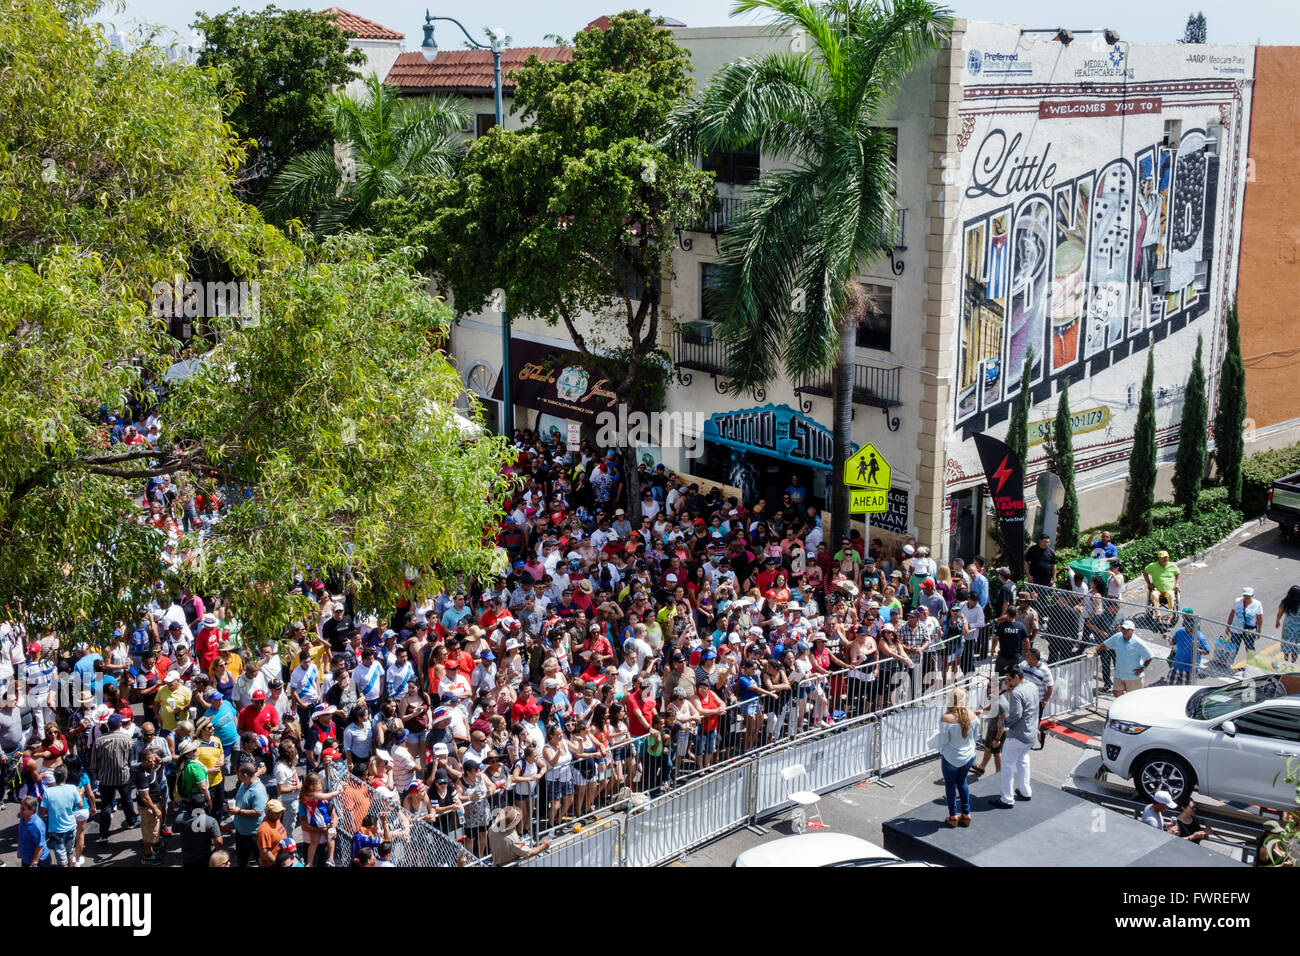 Miami Florida,Little Havana,Calle Ocho,annual street festival,Hispanic crowd,audience,free concert,FL160324102 Stock Photo